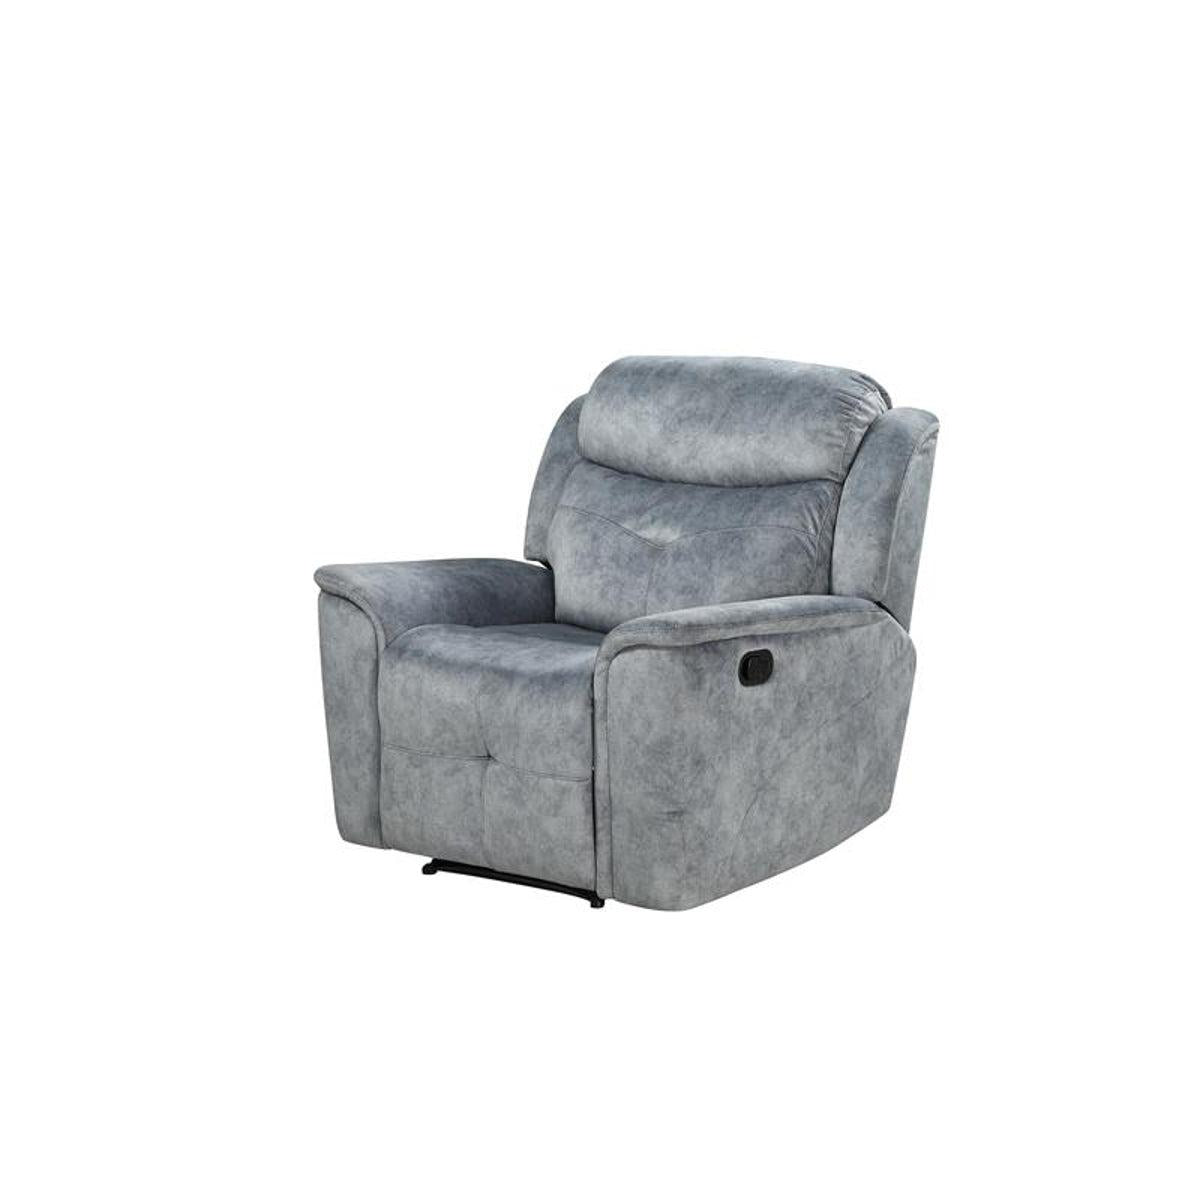 Acme Furniture Mariana Recliner in Silver Gray 55032  Half Price Furniture